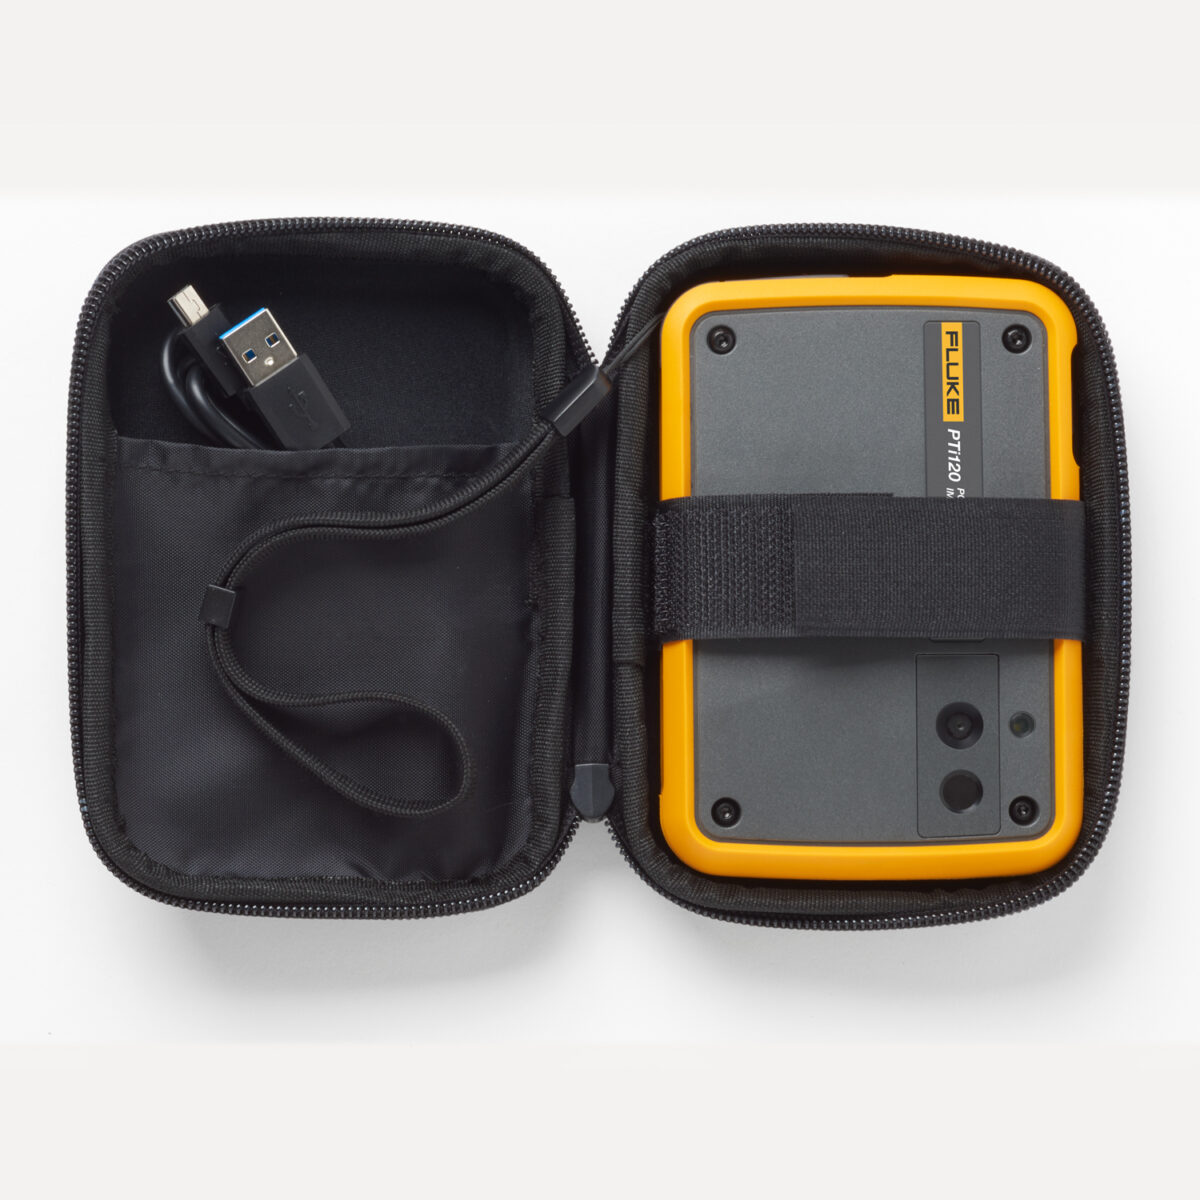 Fluke PTi120 Pocket Thermal Imager - Soft Case